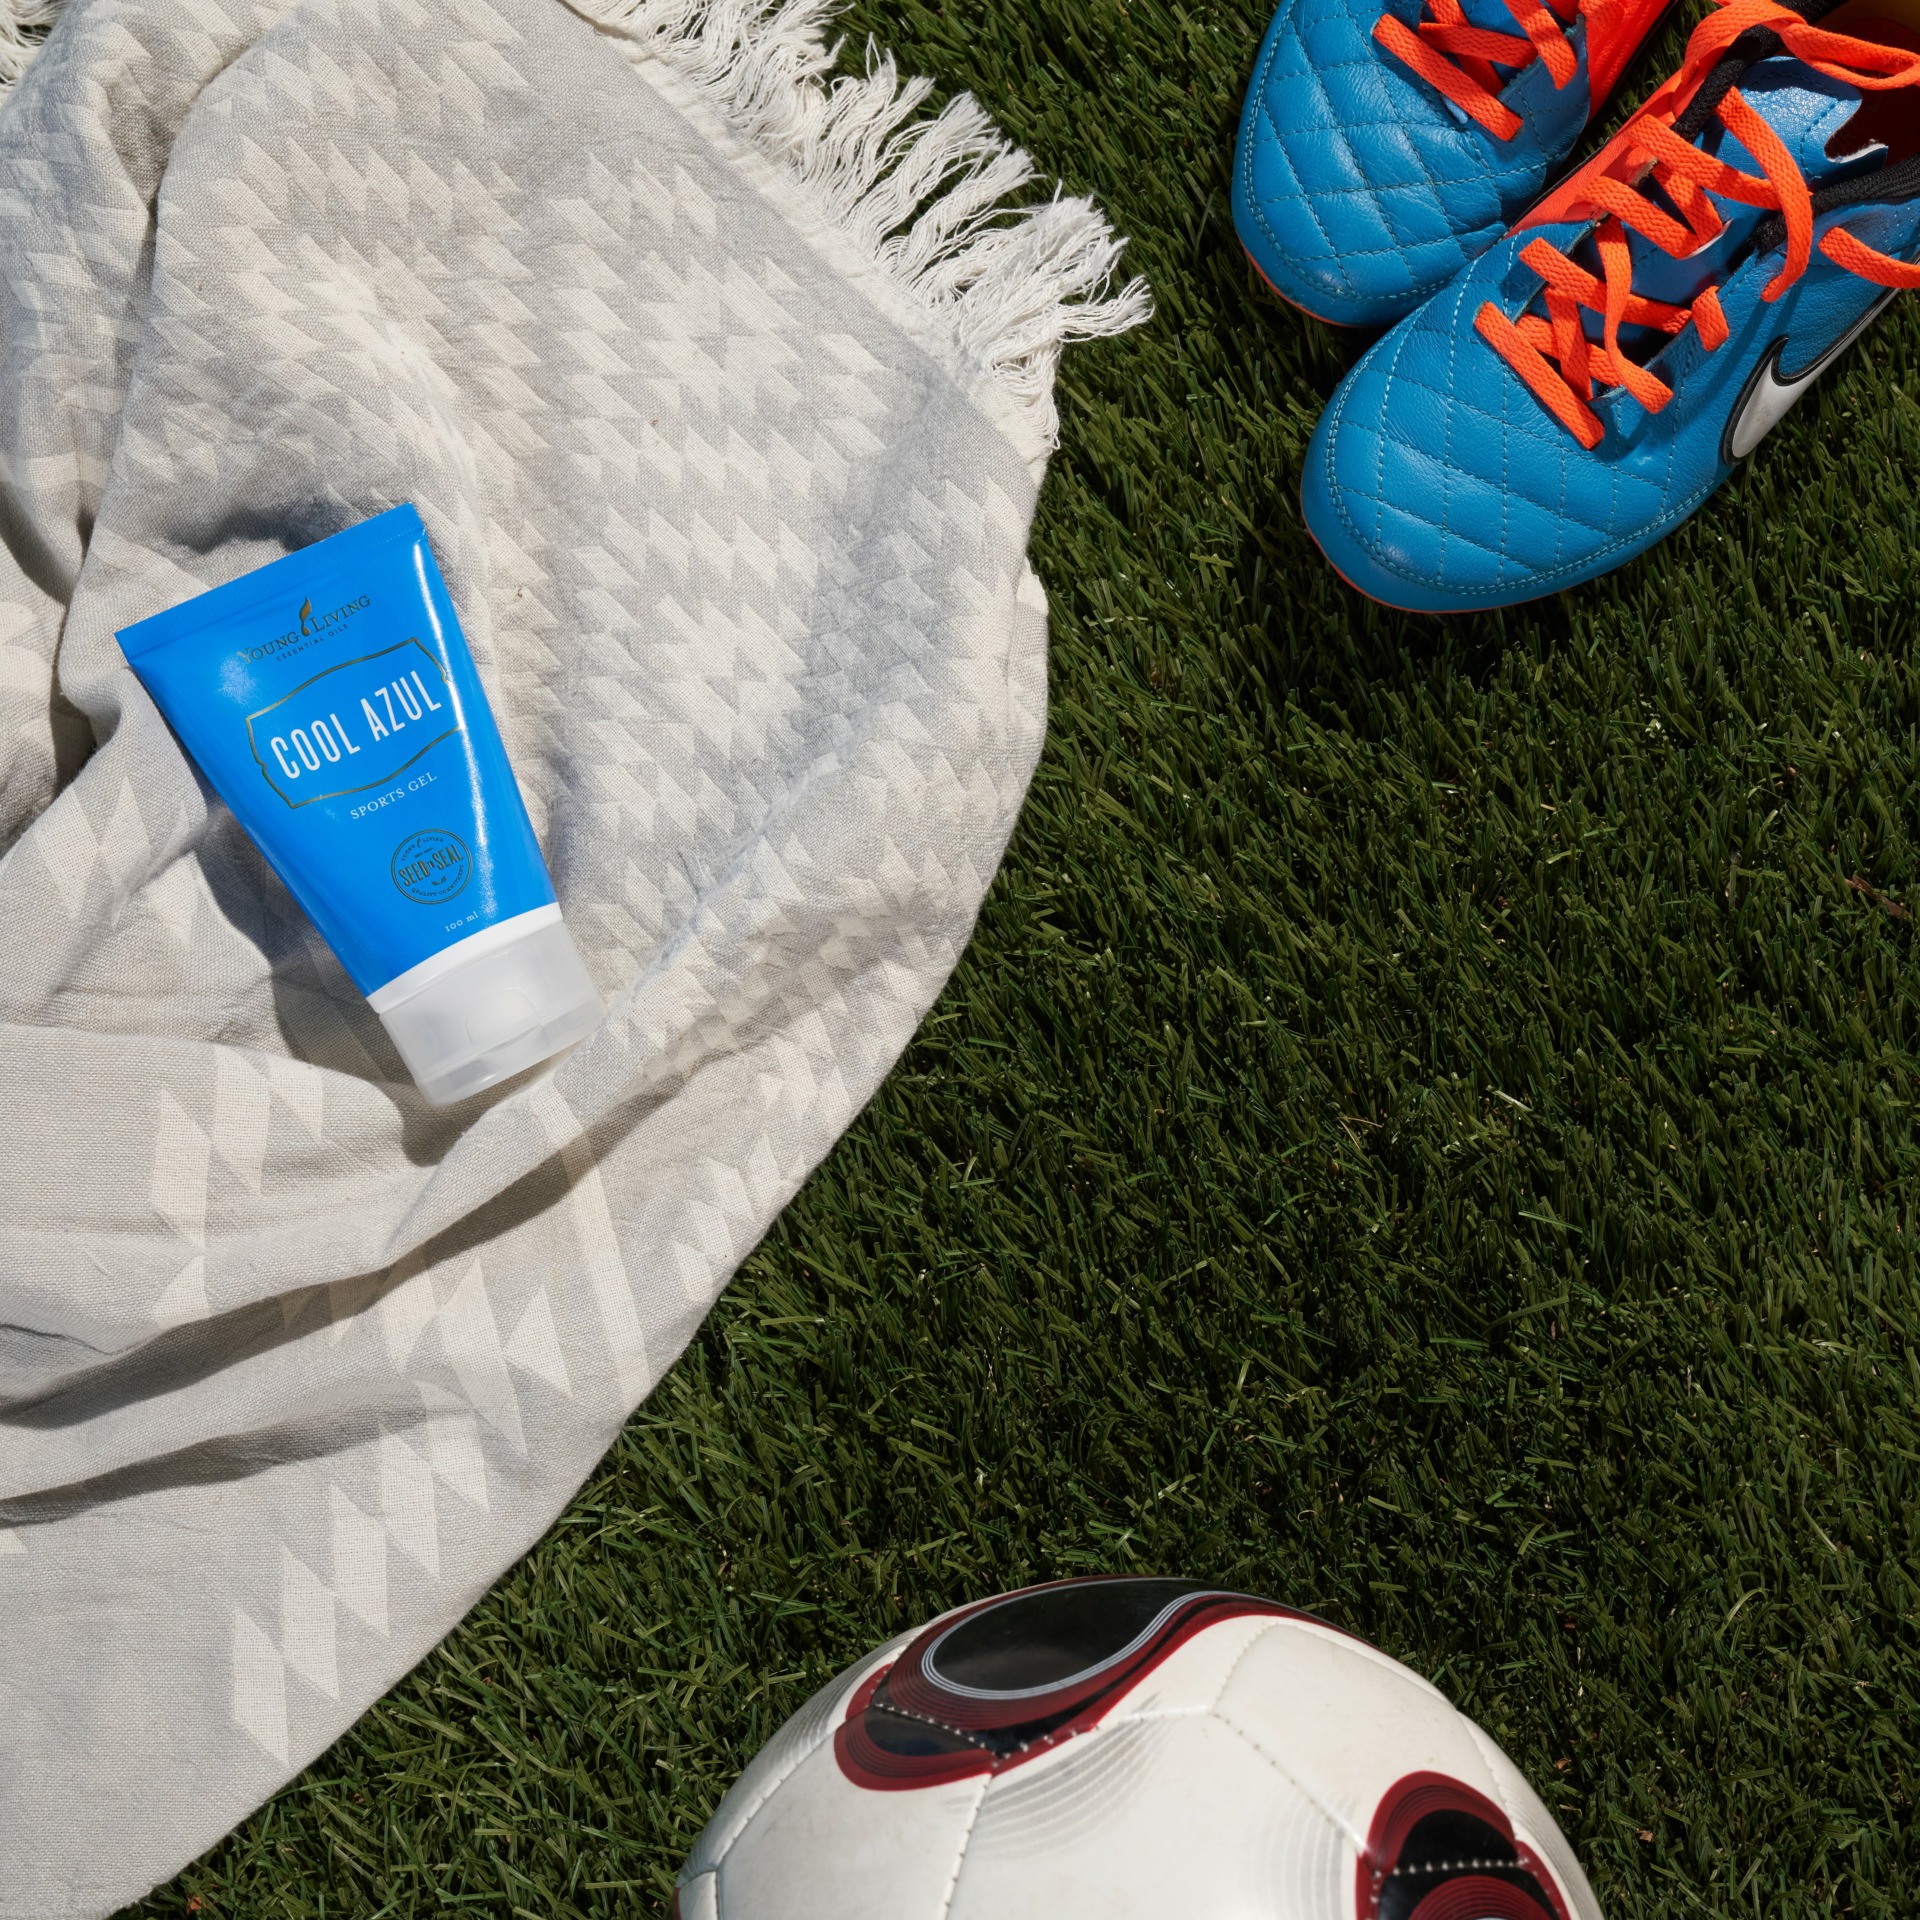 Cool azul sports gel and gear